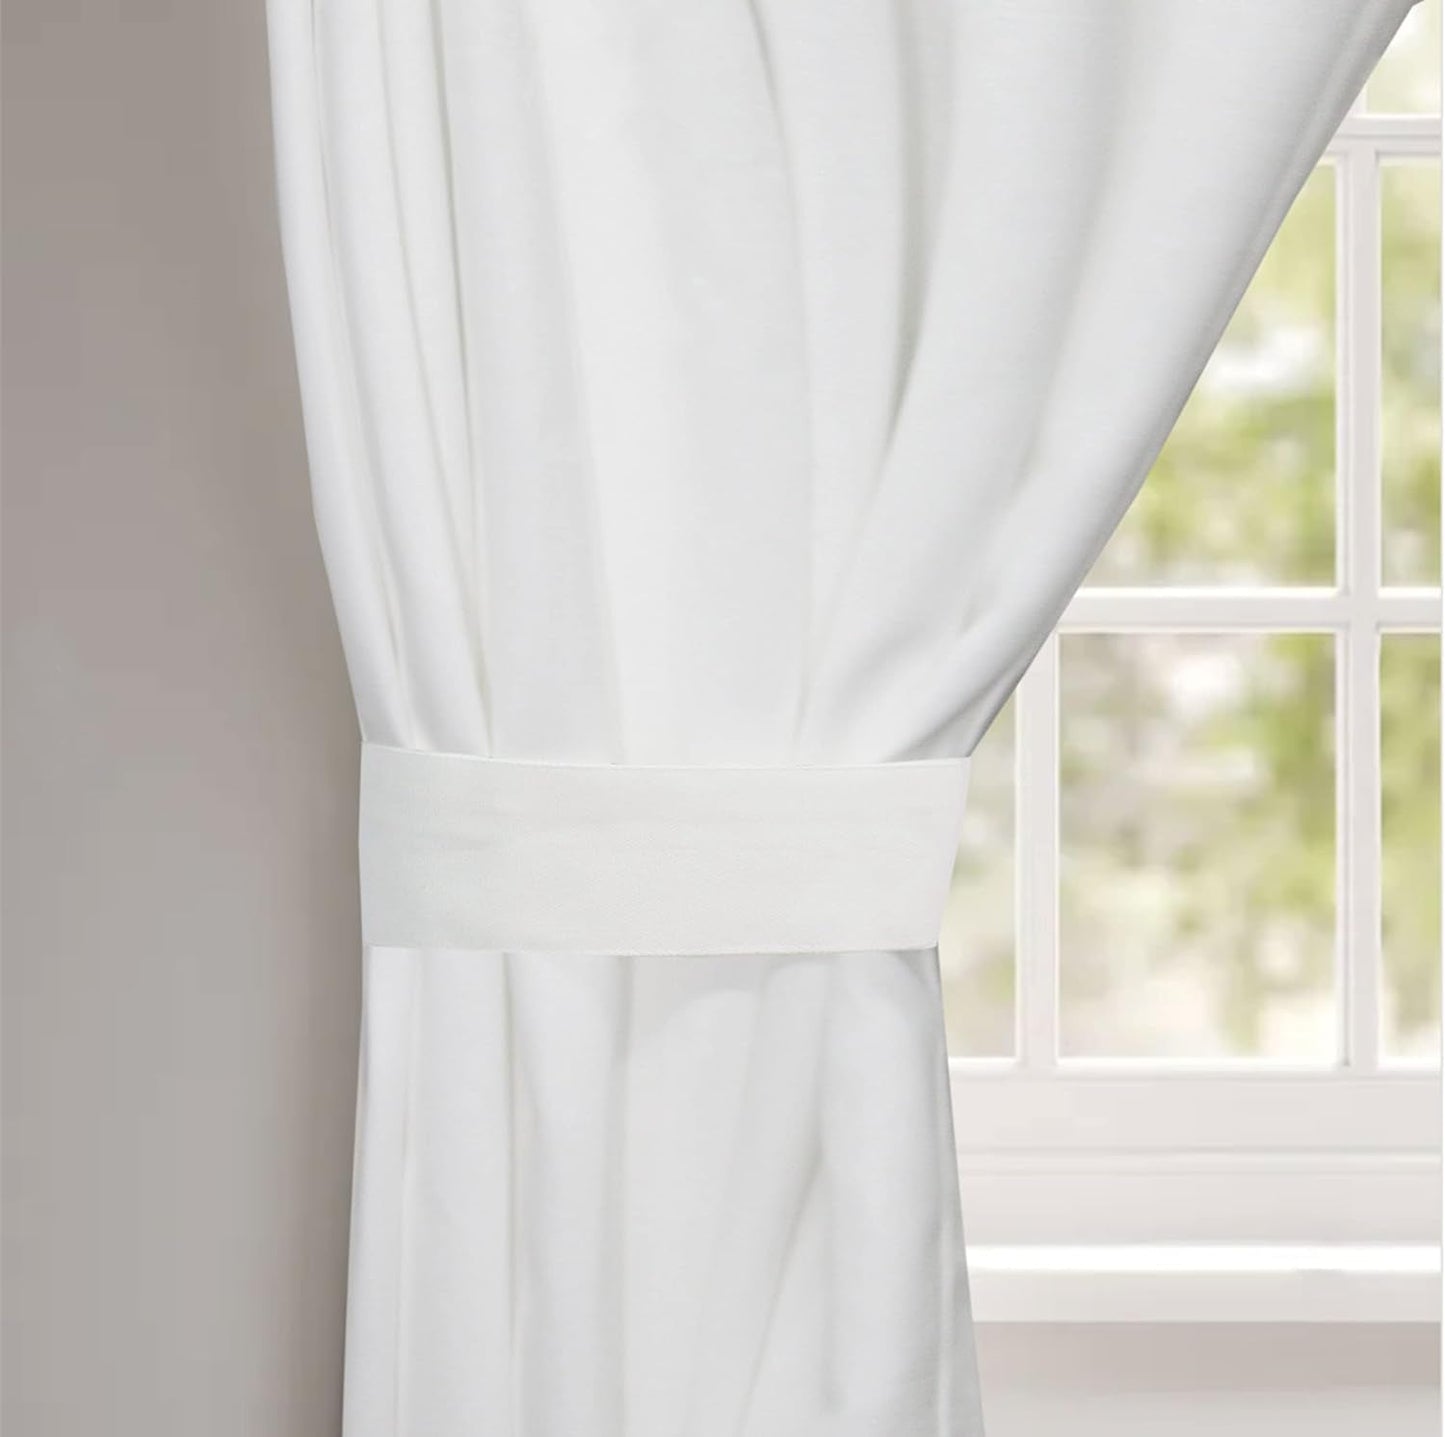 COTTON CRAFT White Curtain Window Panel Drapes - Set of 2 - Thick Cotton Duck Fabric Reverse Tab Top Window Treatment - Bonus Tie Backs - Clean Crisp Elegant Look - Bedroom Living Room - 50 W X 84 L